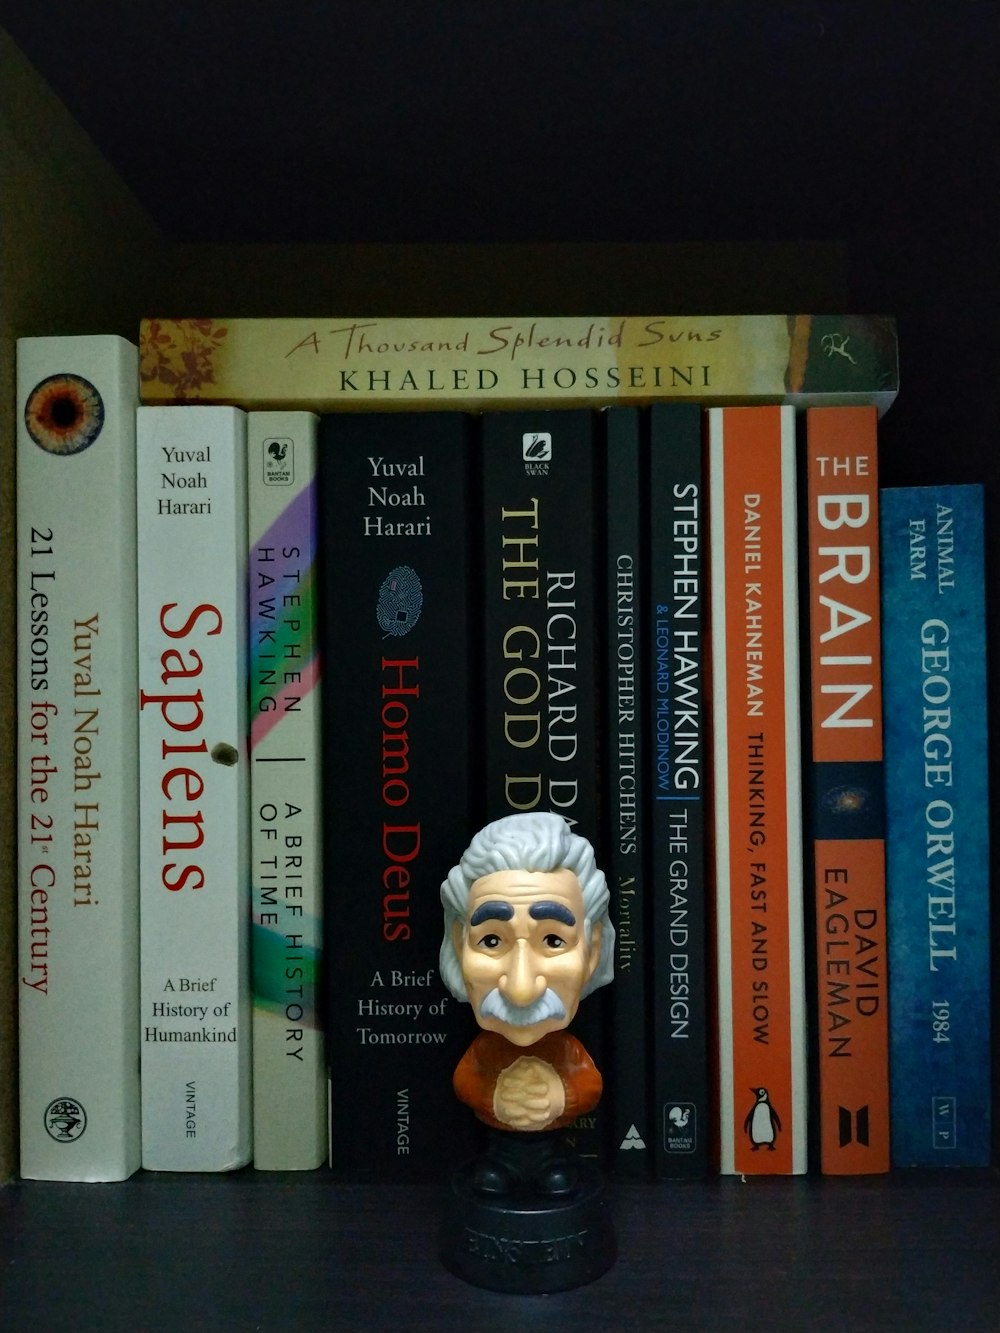 Albert Einstein mini figure besides books